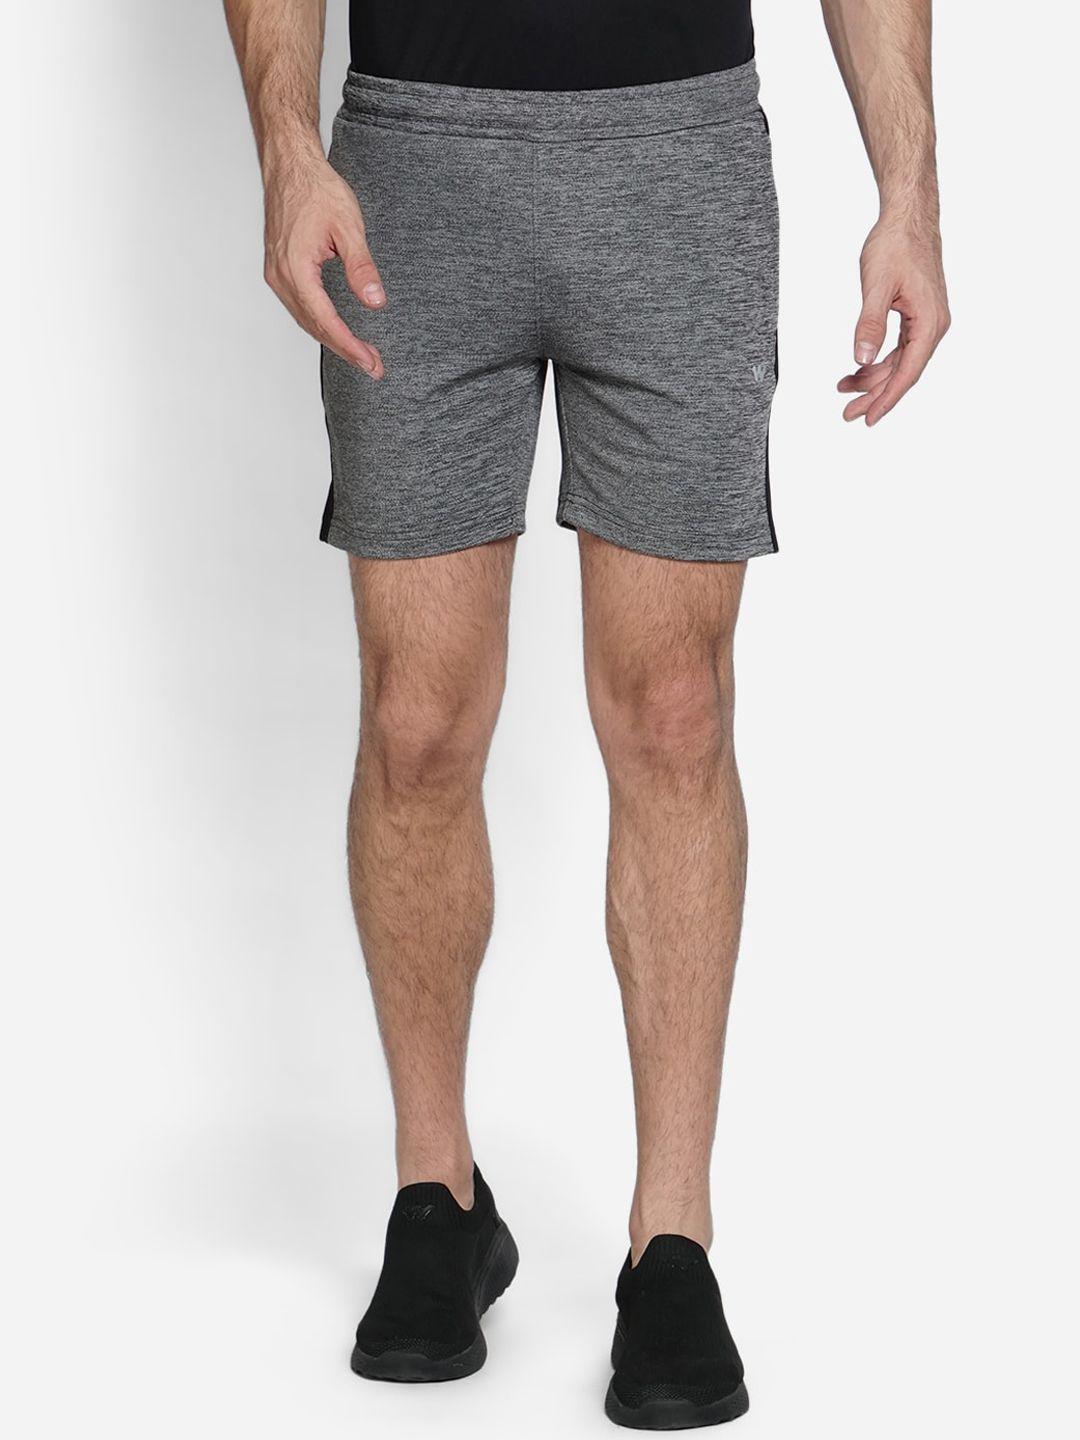 wildcraft men grey shorts